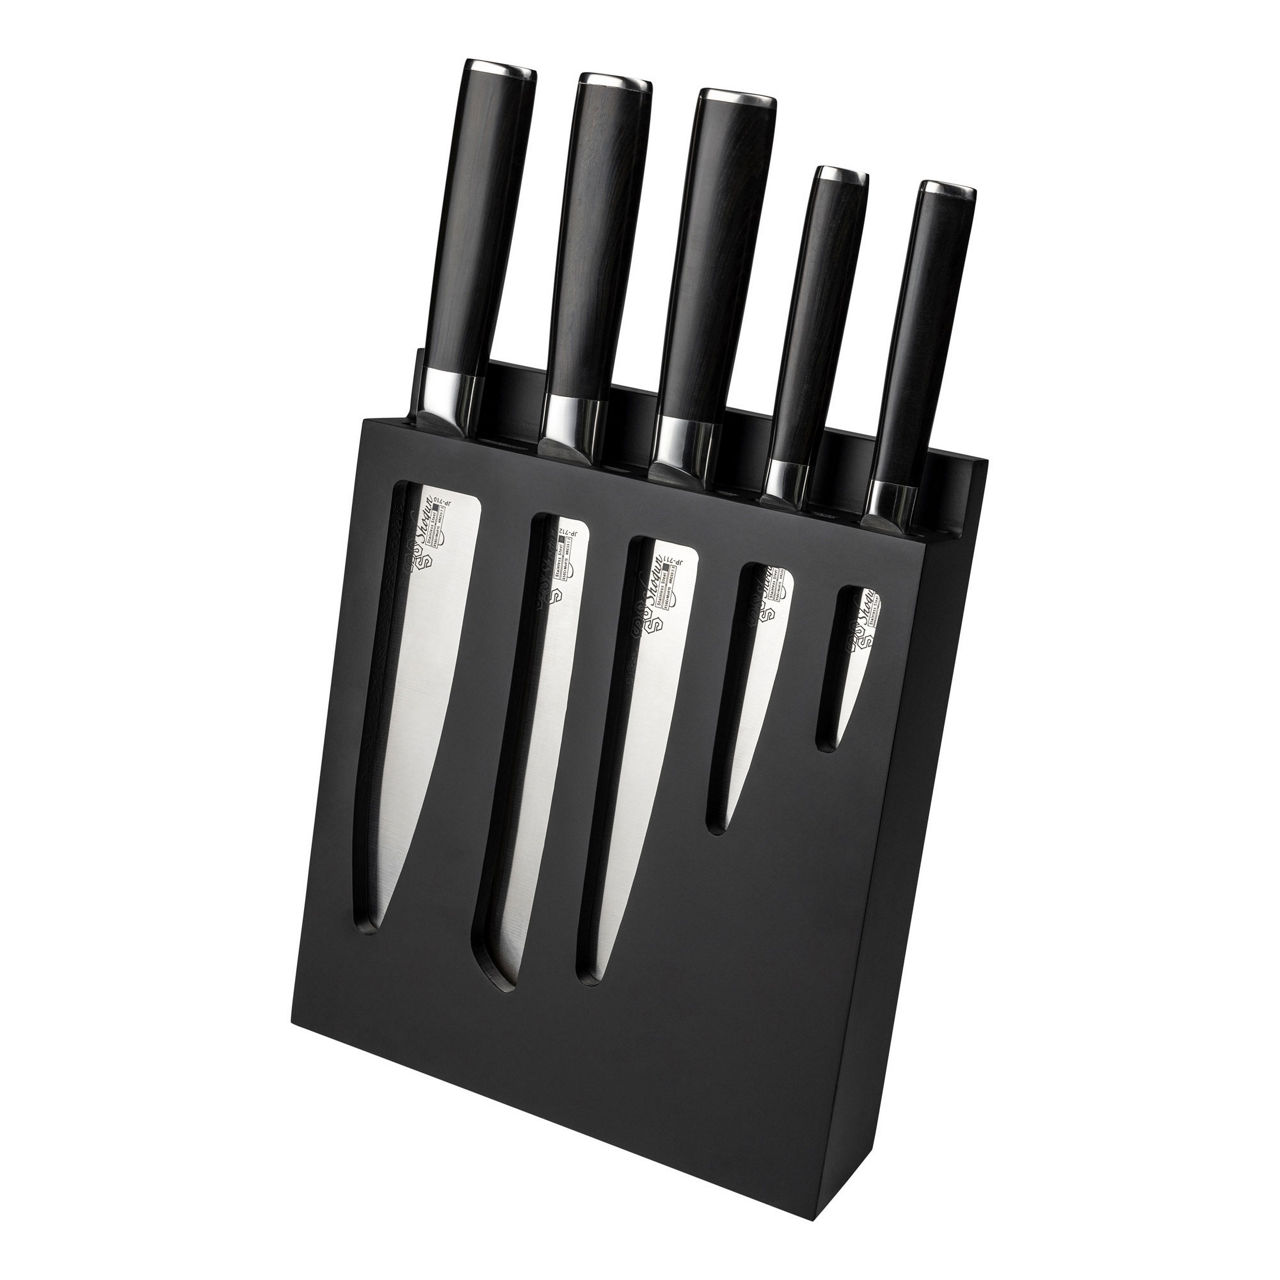 Kocpudu 6 Piece Stainless Steel Knife Block Set lzj5422